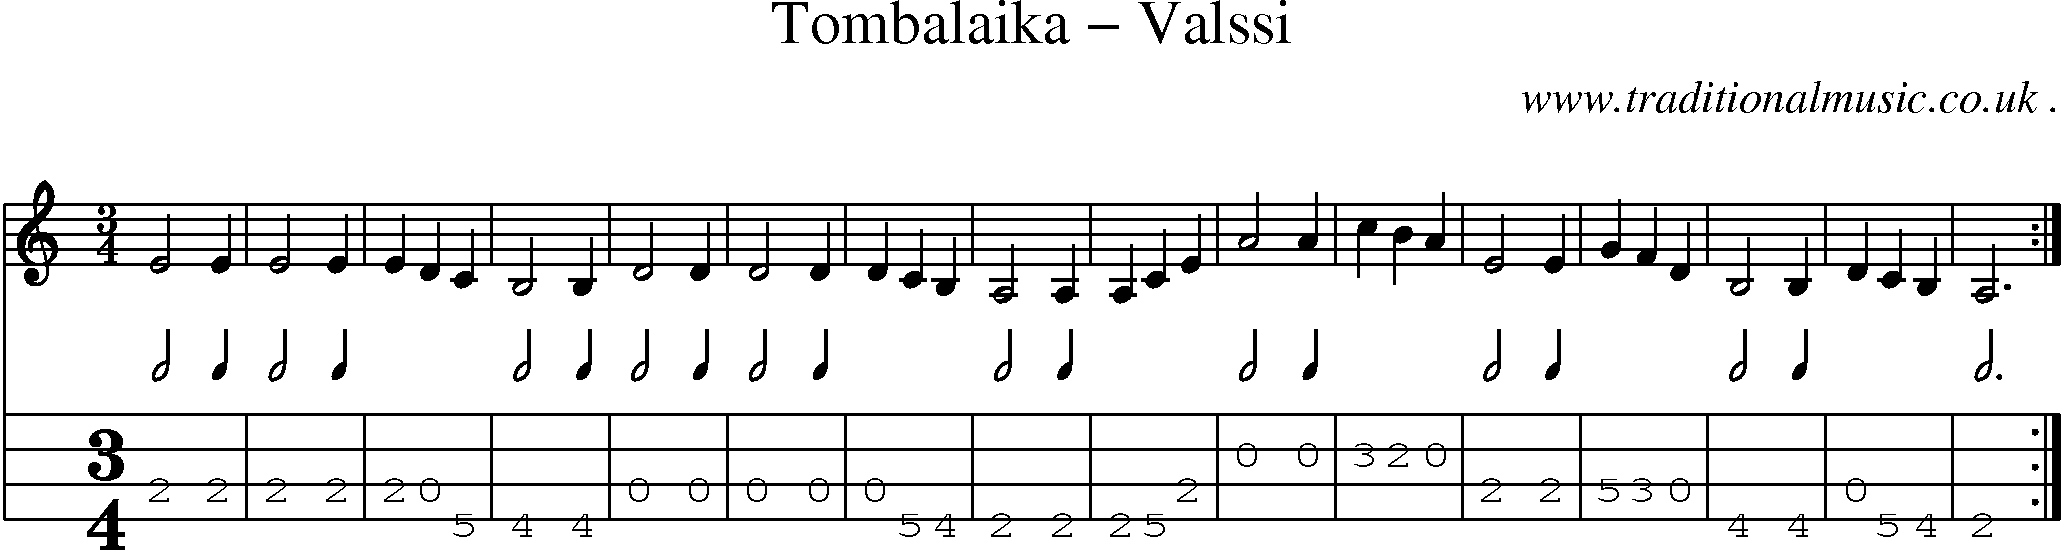 Sheet-Music and Mandolin Tabs for Tombalaika Valssi